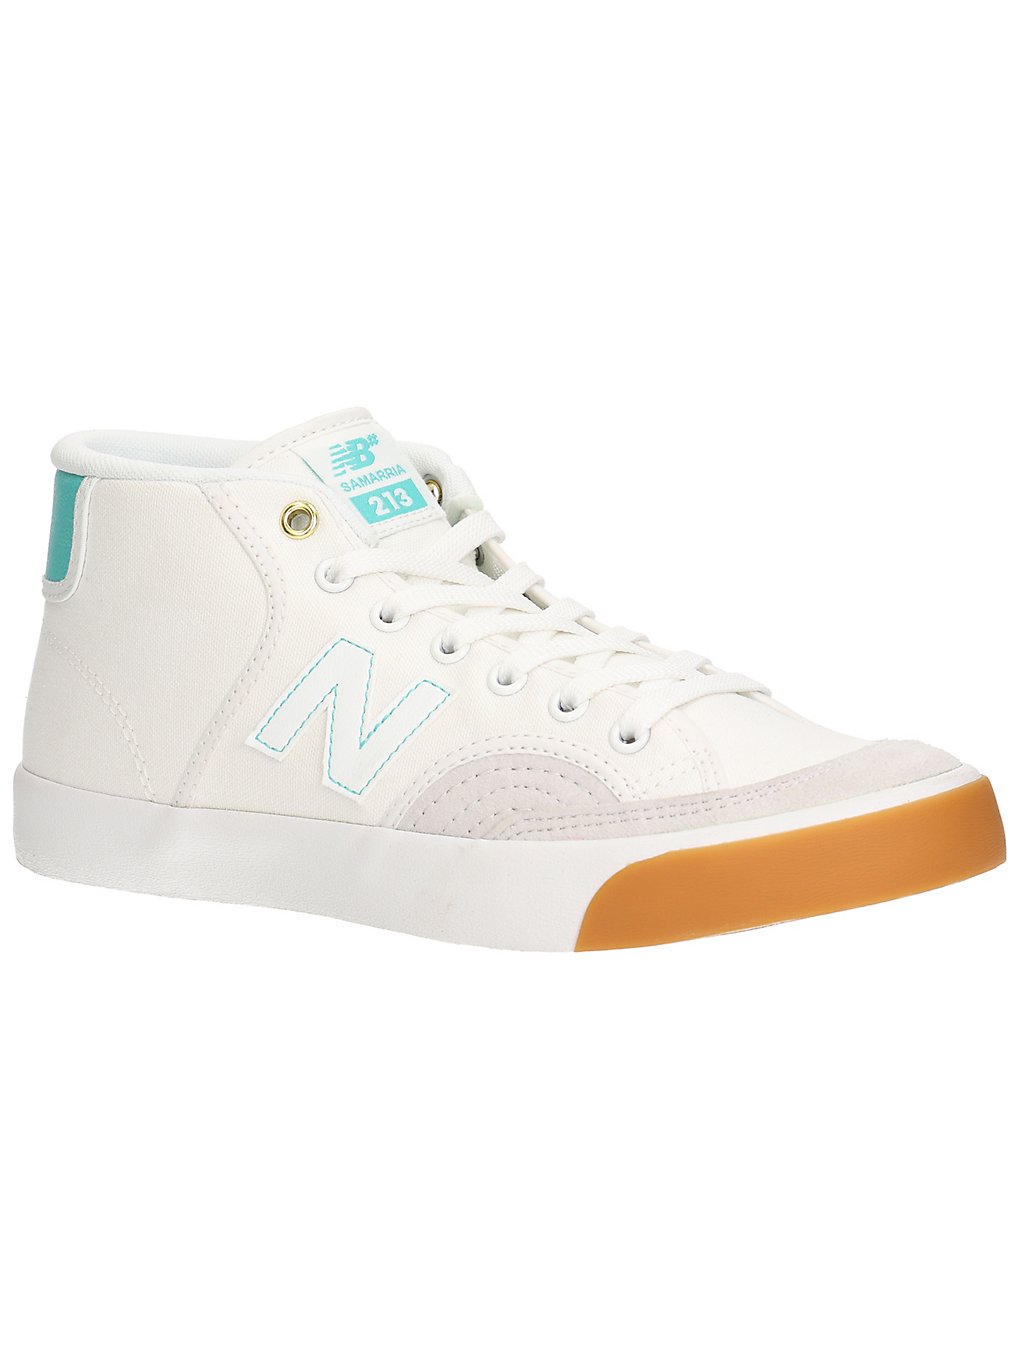 New Balance Numeric NM213 Skate Shoes white